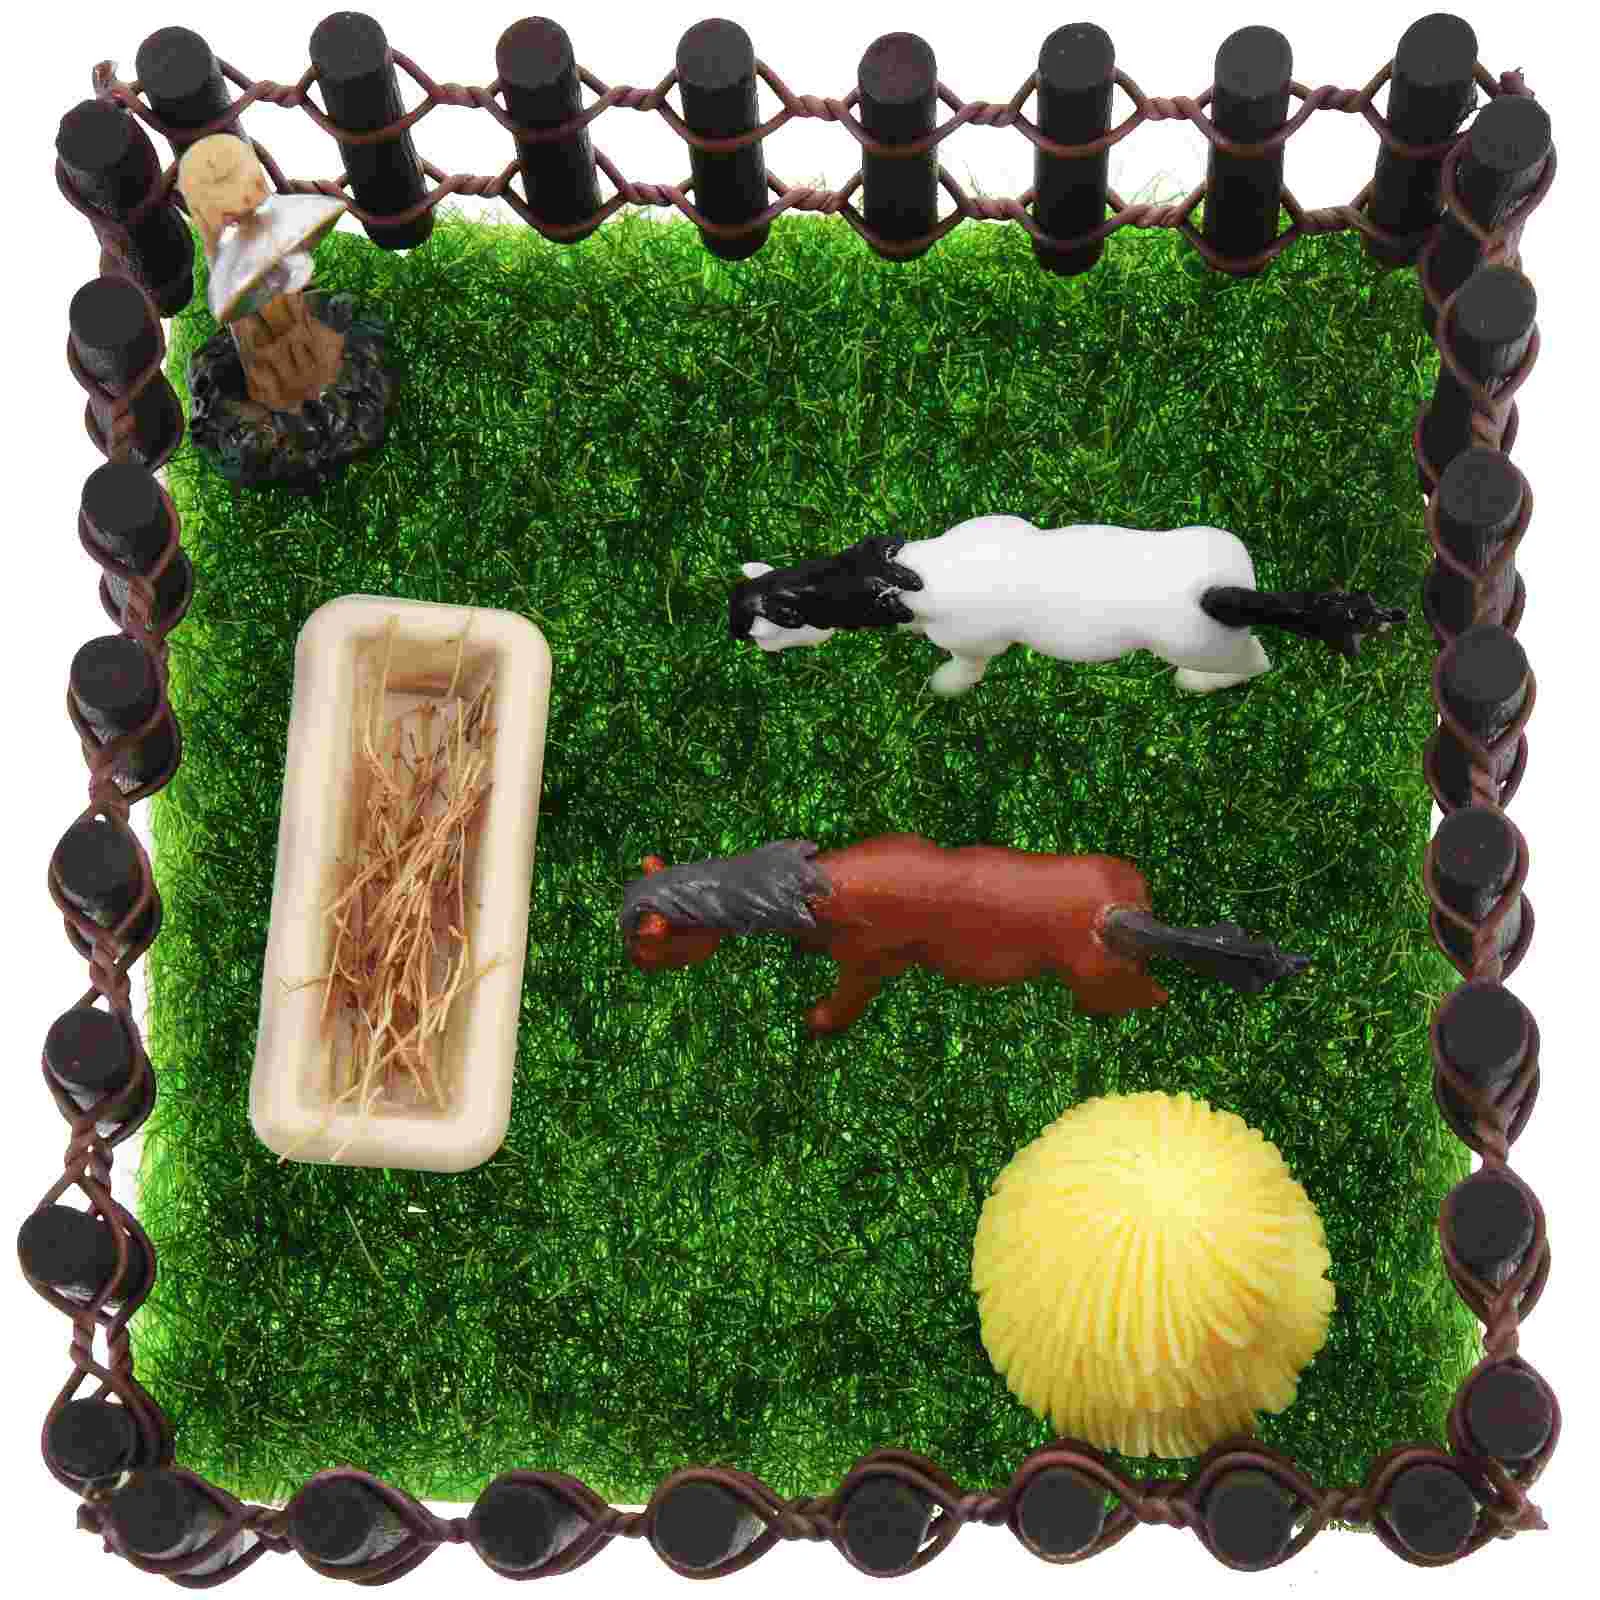 

1 Set Miniature Horse Ranch Realistic Miniature Stud-Farm Decor Microlandscape Layout Model